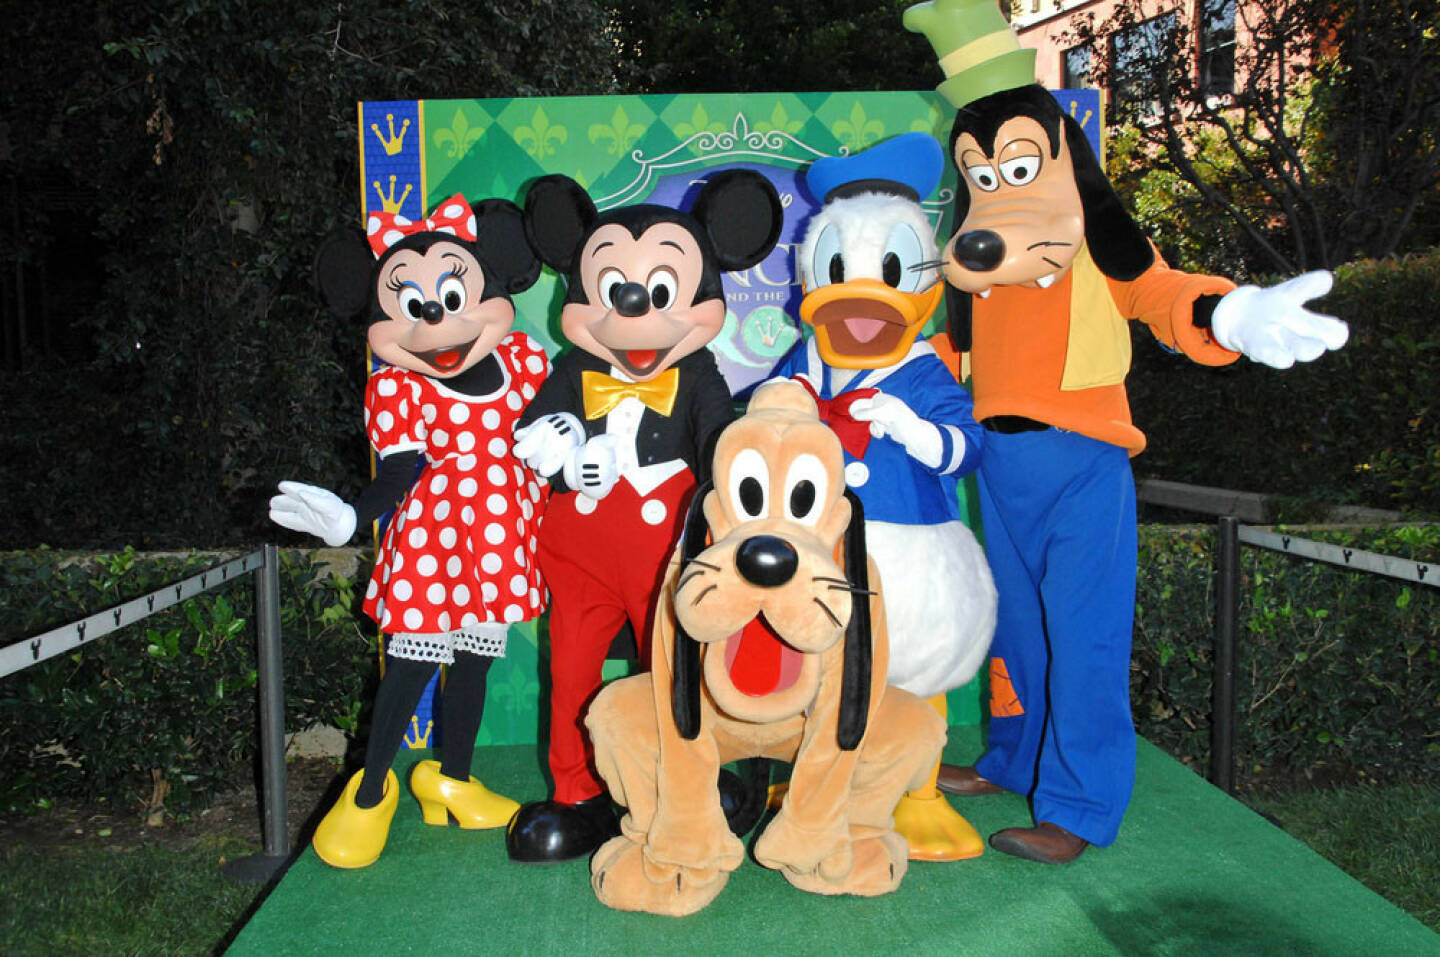 Walt Disney, Minnie, Mickey Maus, Pluto, Donald Duck, Goofy, <a href=http://www.shutterstock.com/gallery-842284p1.html?cr=00&pl=edit-00>s_bukley</a> / <a href=http://www.shutterstock.com/?cr=00&pl=edit-00>Shutterstock.com</a> , s_bukley / Shutterstock.com